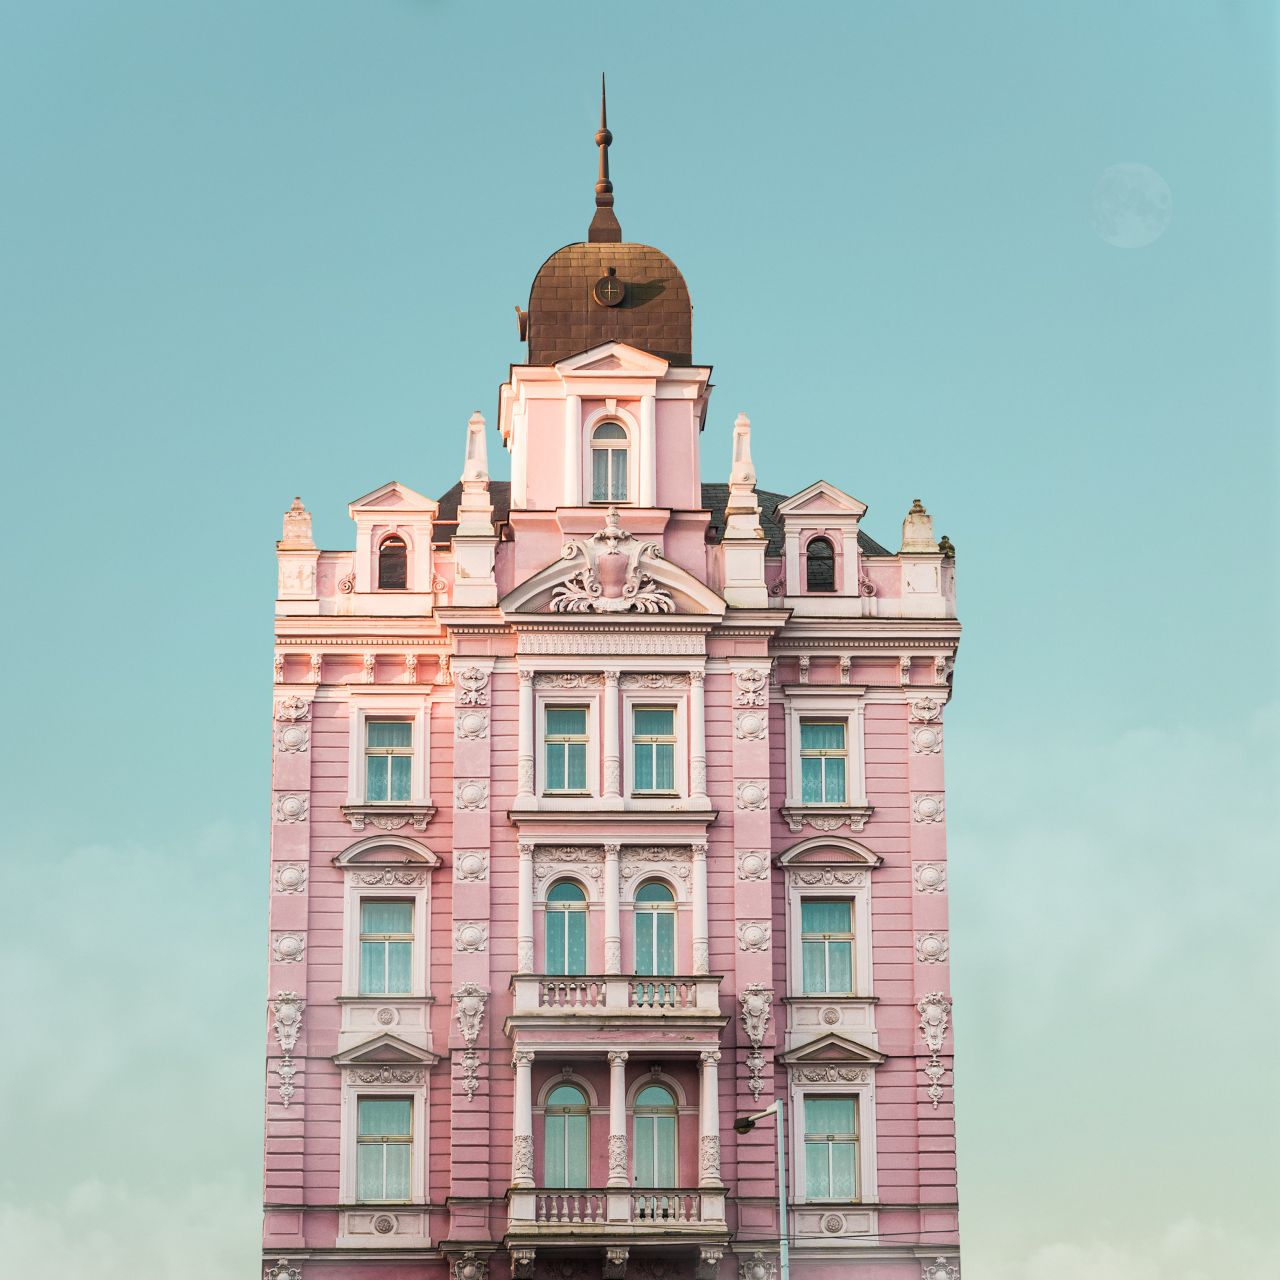 Hotel Opera Prague, Czech Republic, c. 1891. Photo by Valentina Jacks – [@valentina_jacks](https://www.instagram.com/valentina_jacks)